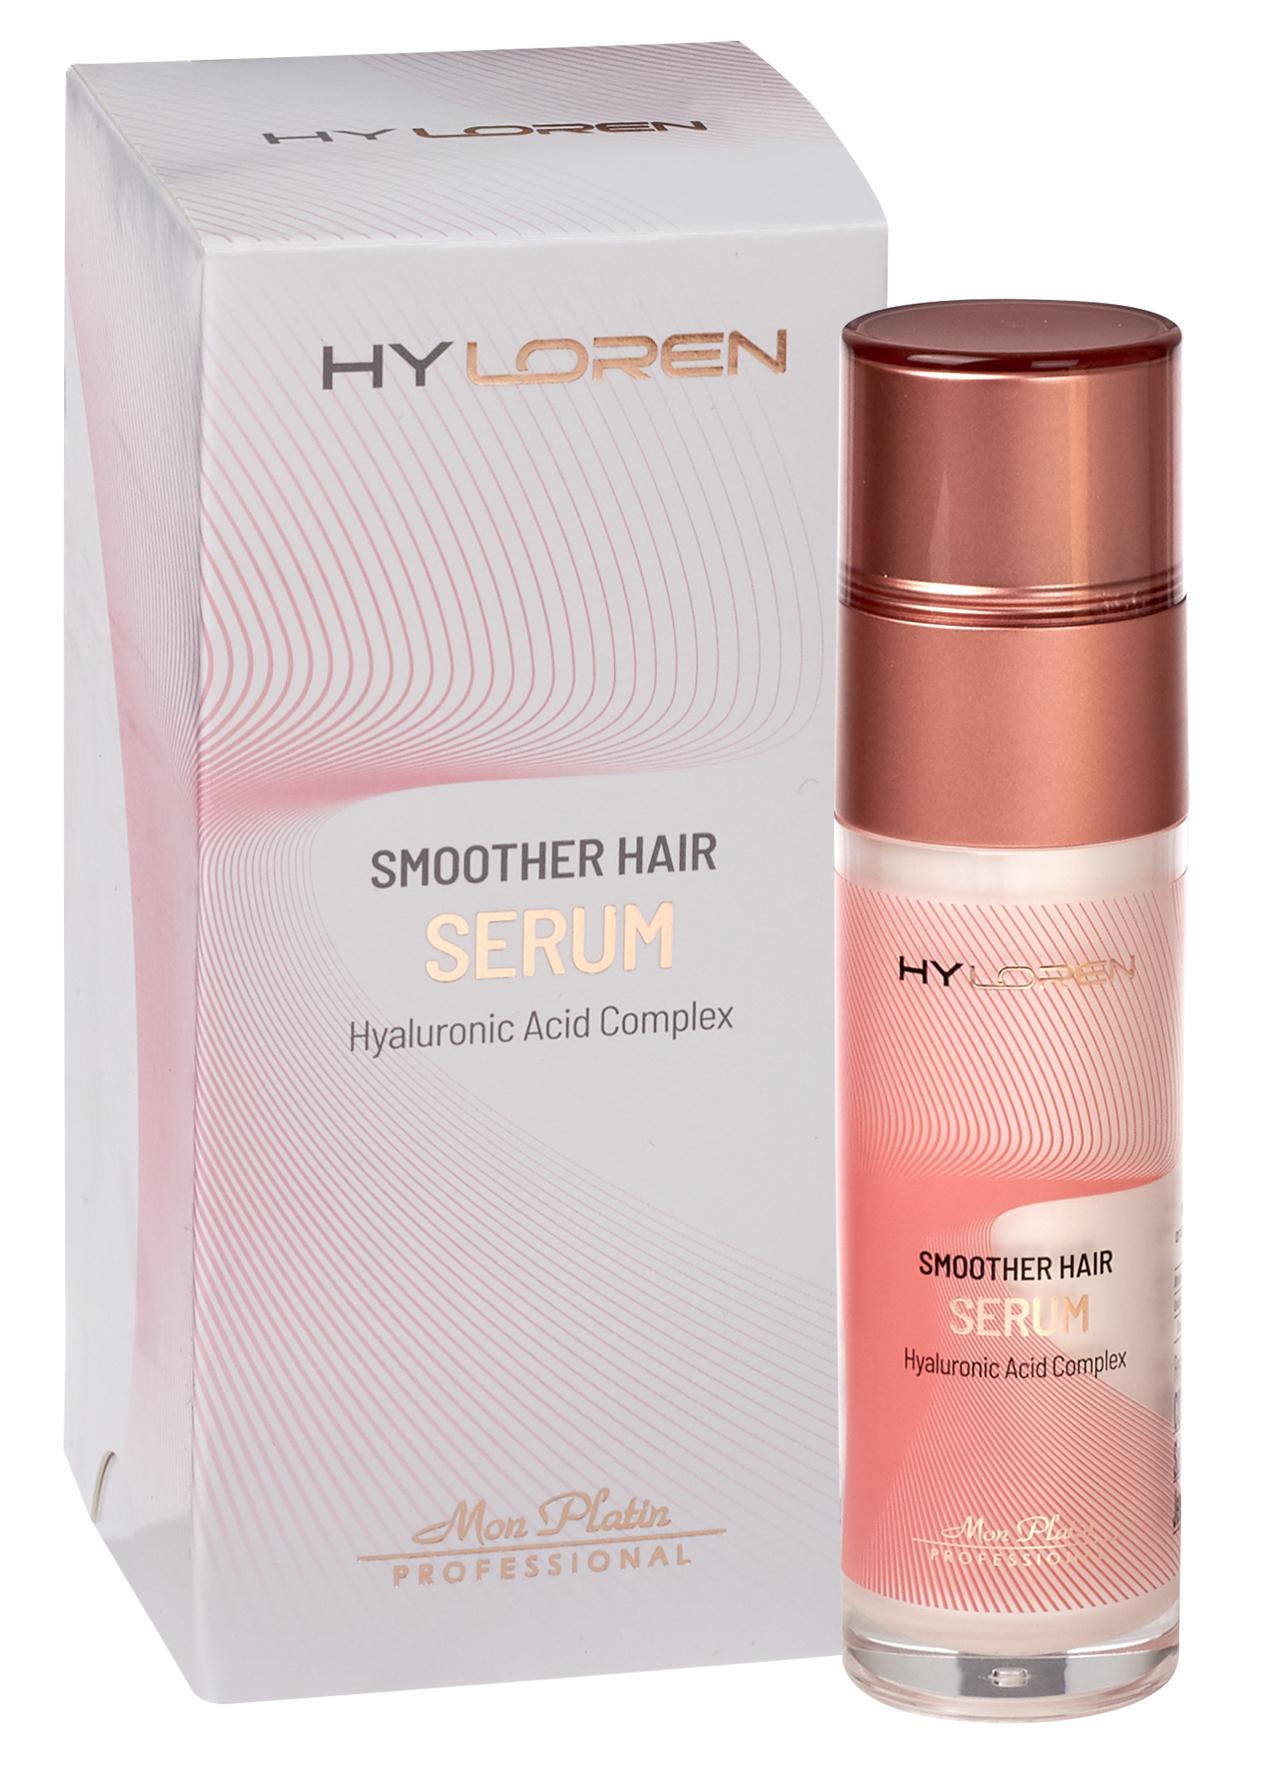 Selected image for MON PLATIN Hyloren Premium Smoother Hair serum 50ml